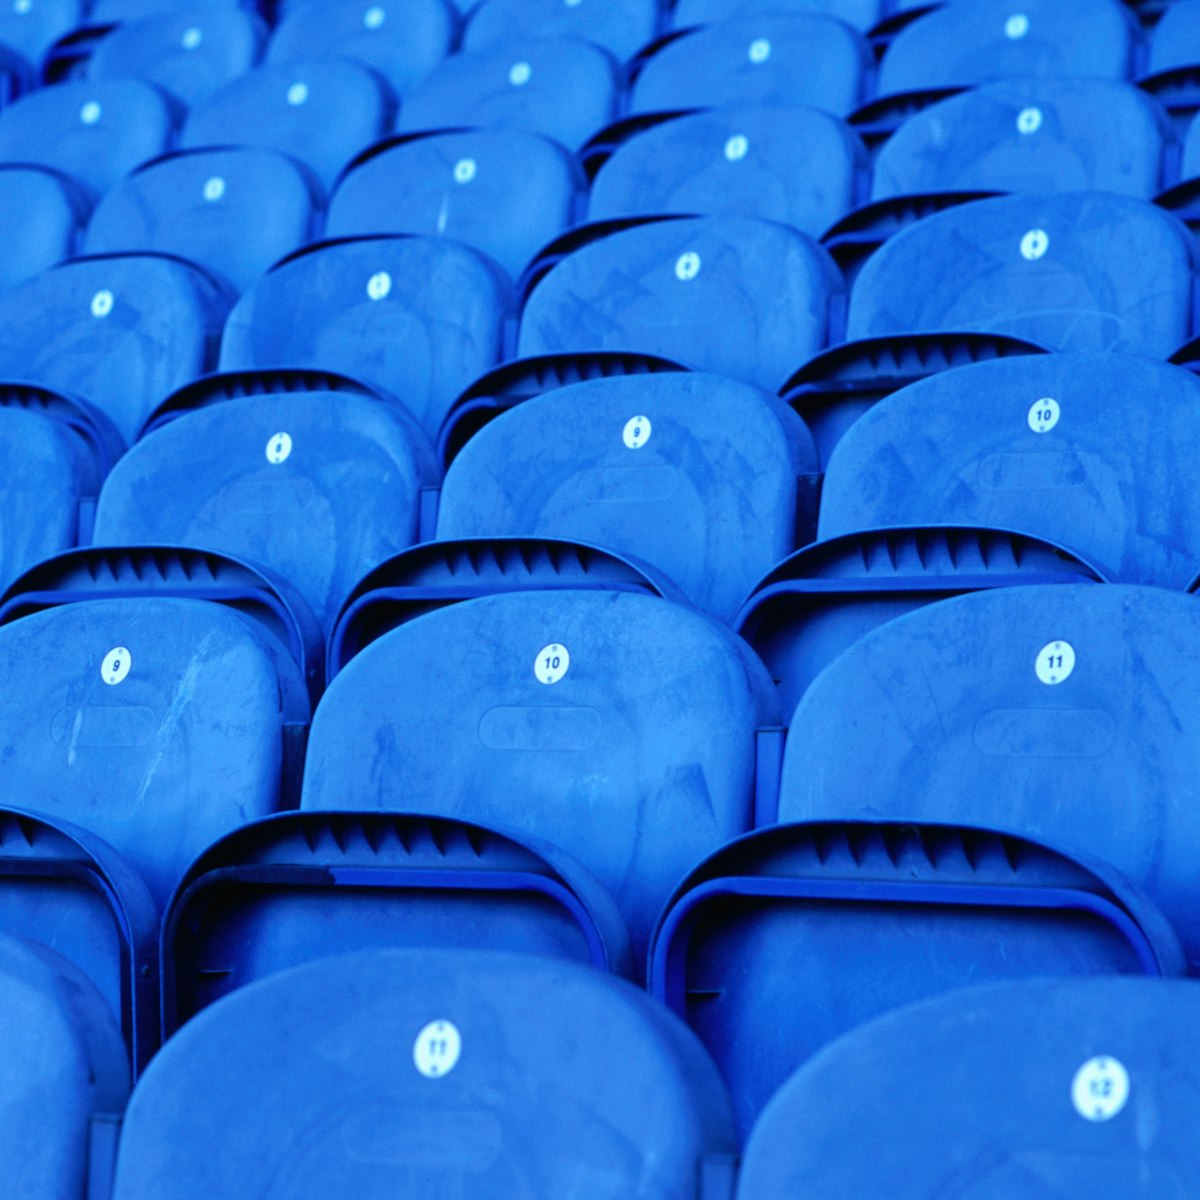 Seating at Croke Park Stadium.